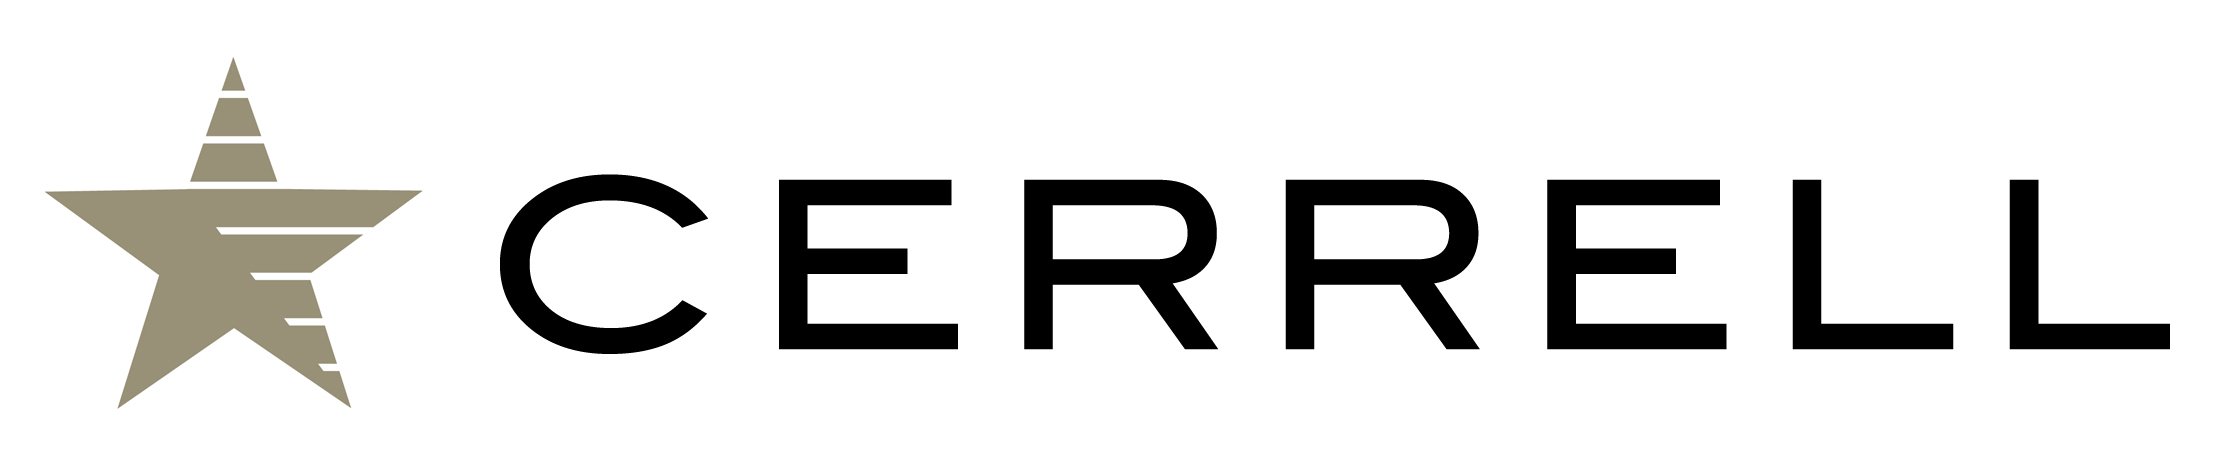 Cerrell Logo Black - Horizontal.jpg